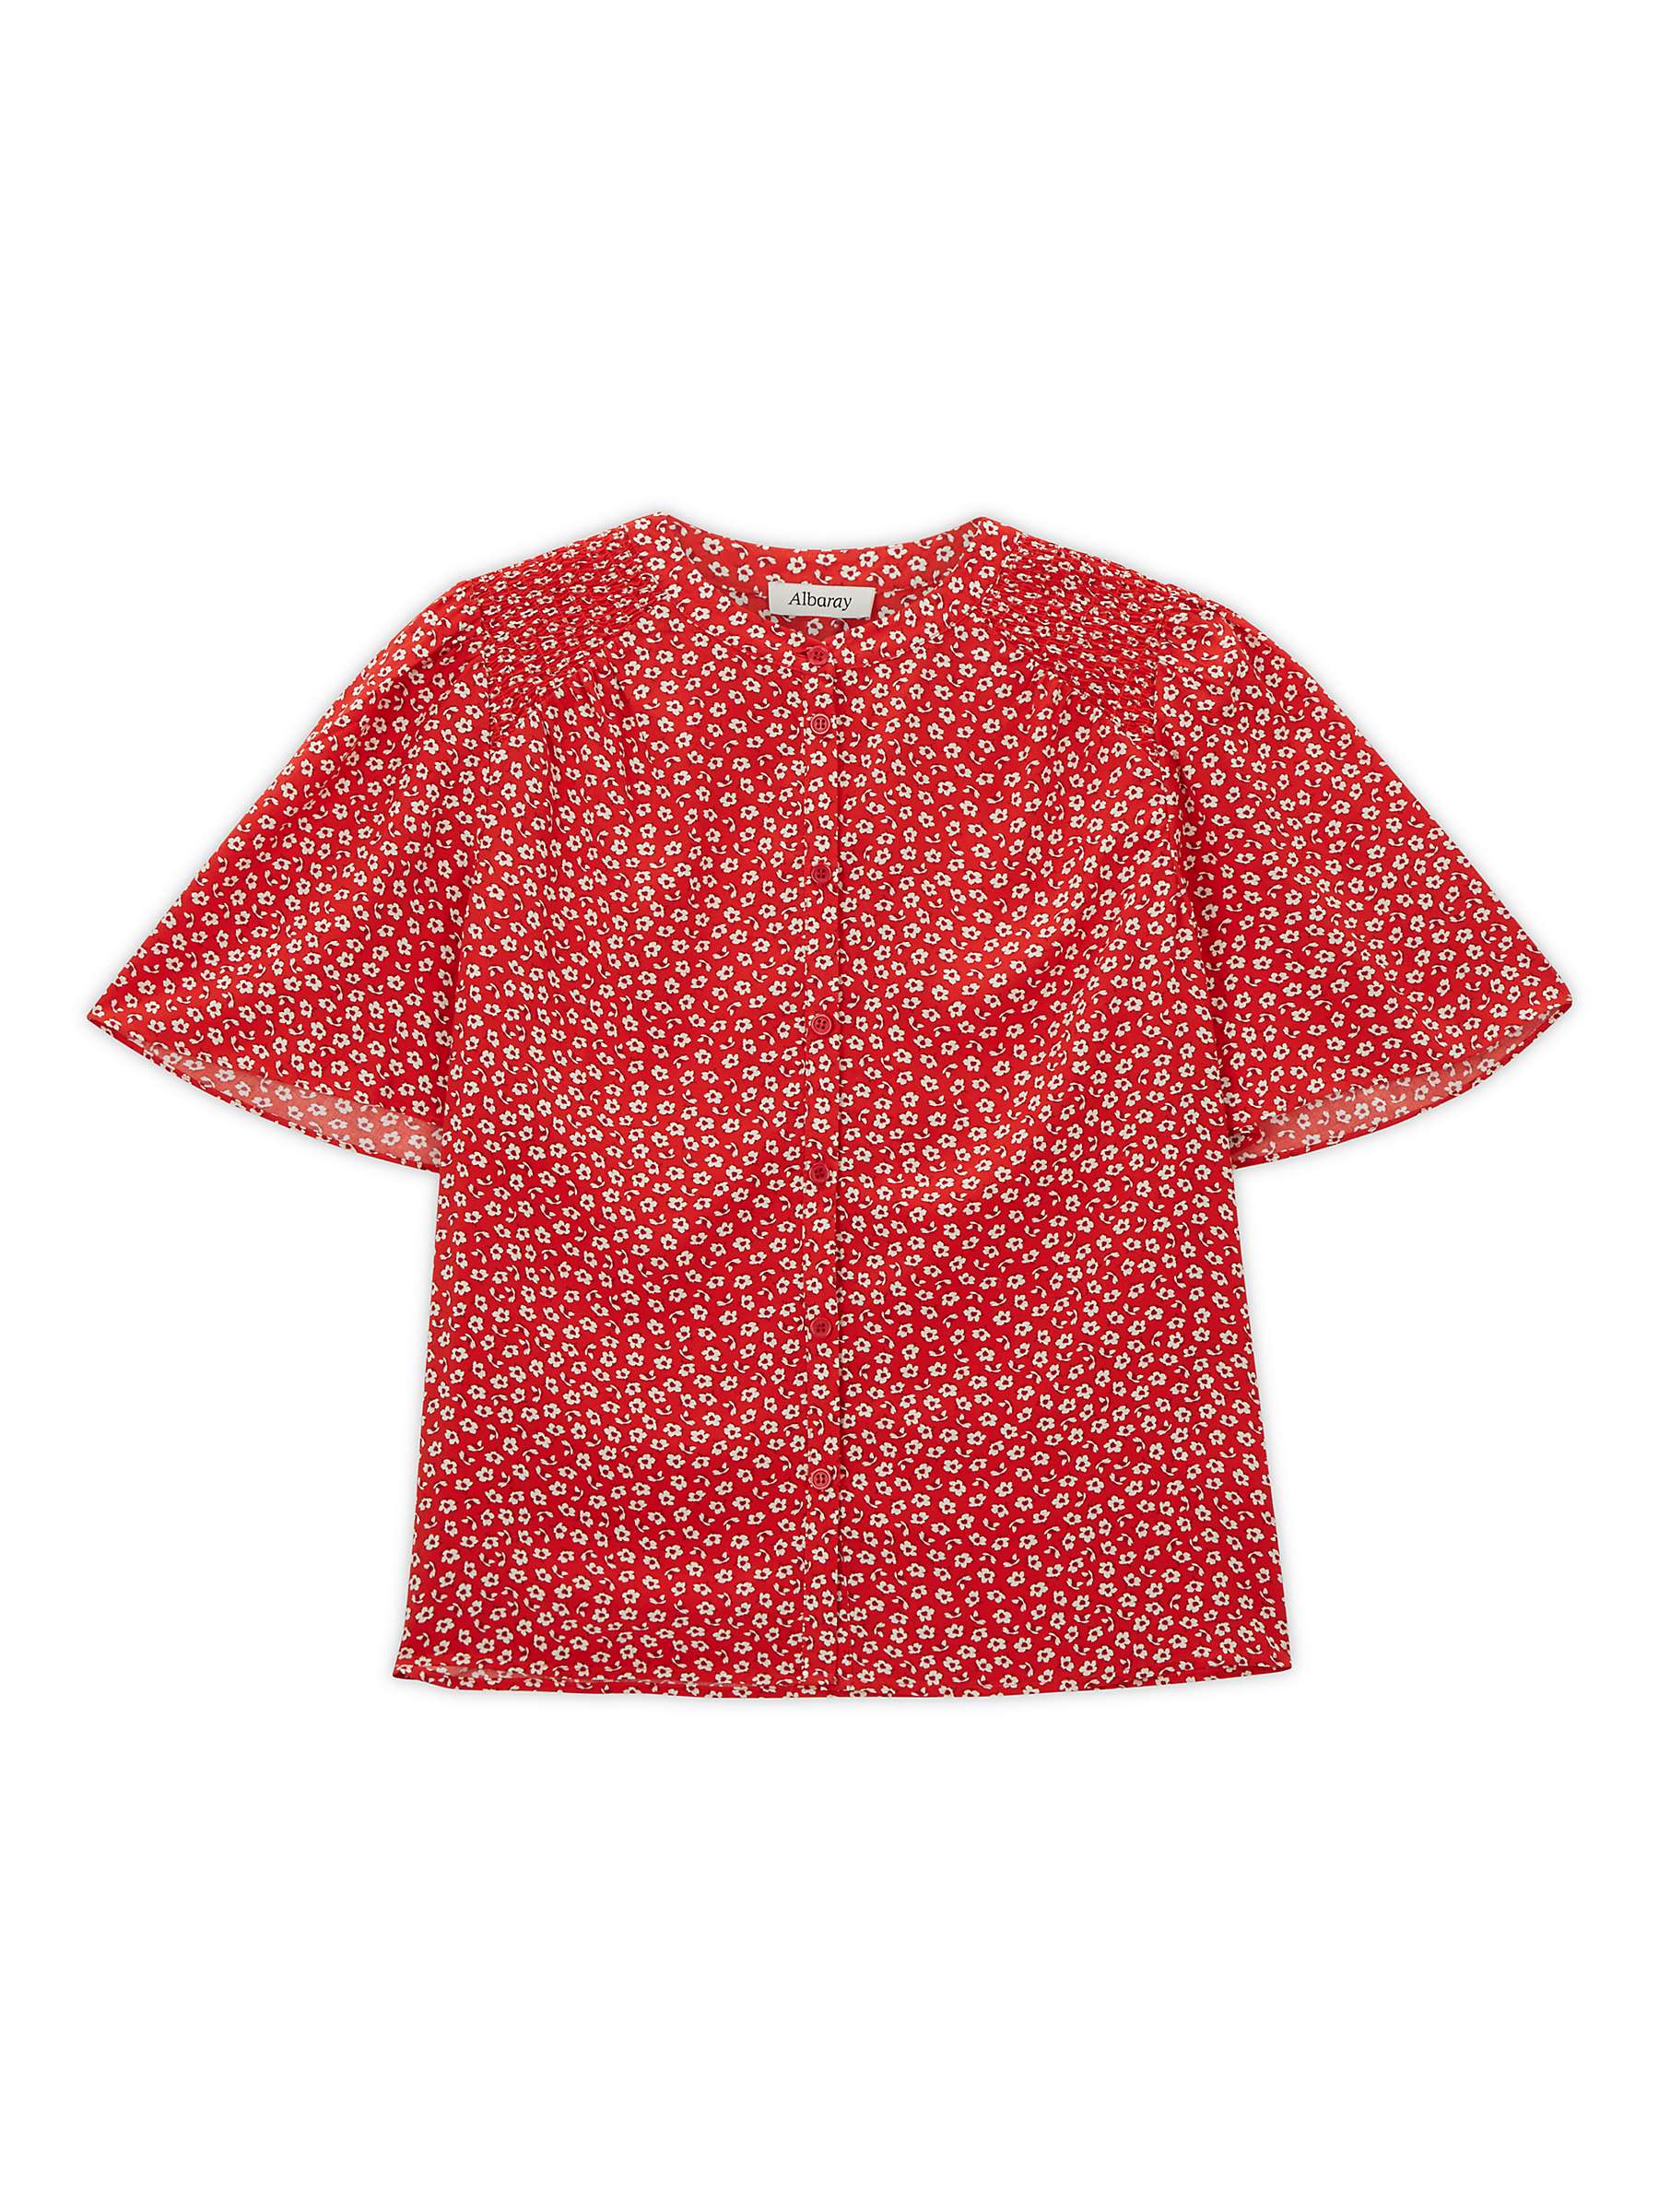 Buy Albaray Floating Floral Shirt, Red Online at johnlewis.com